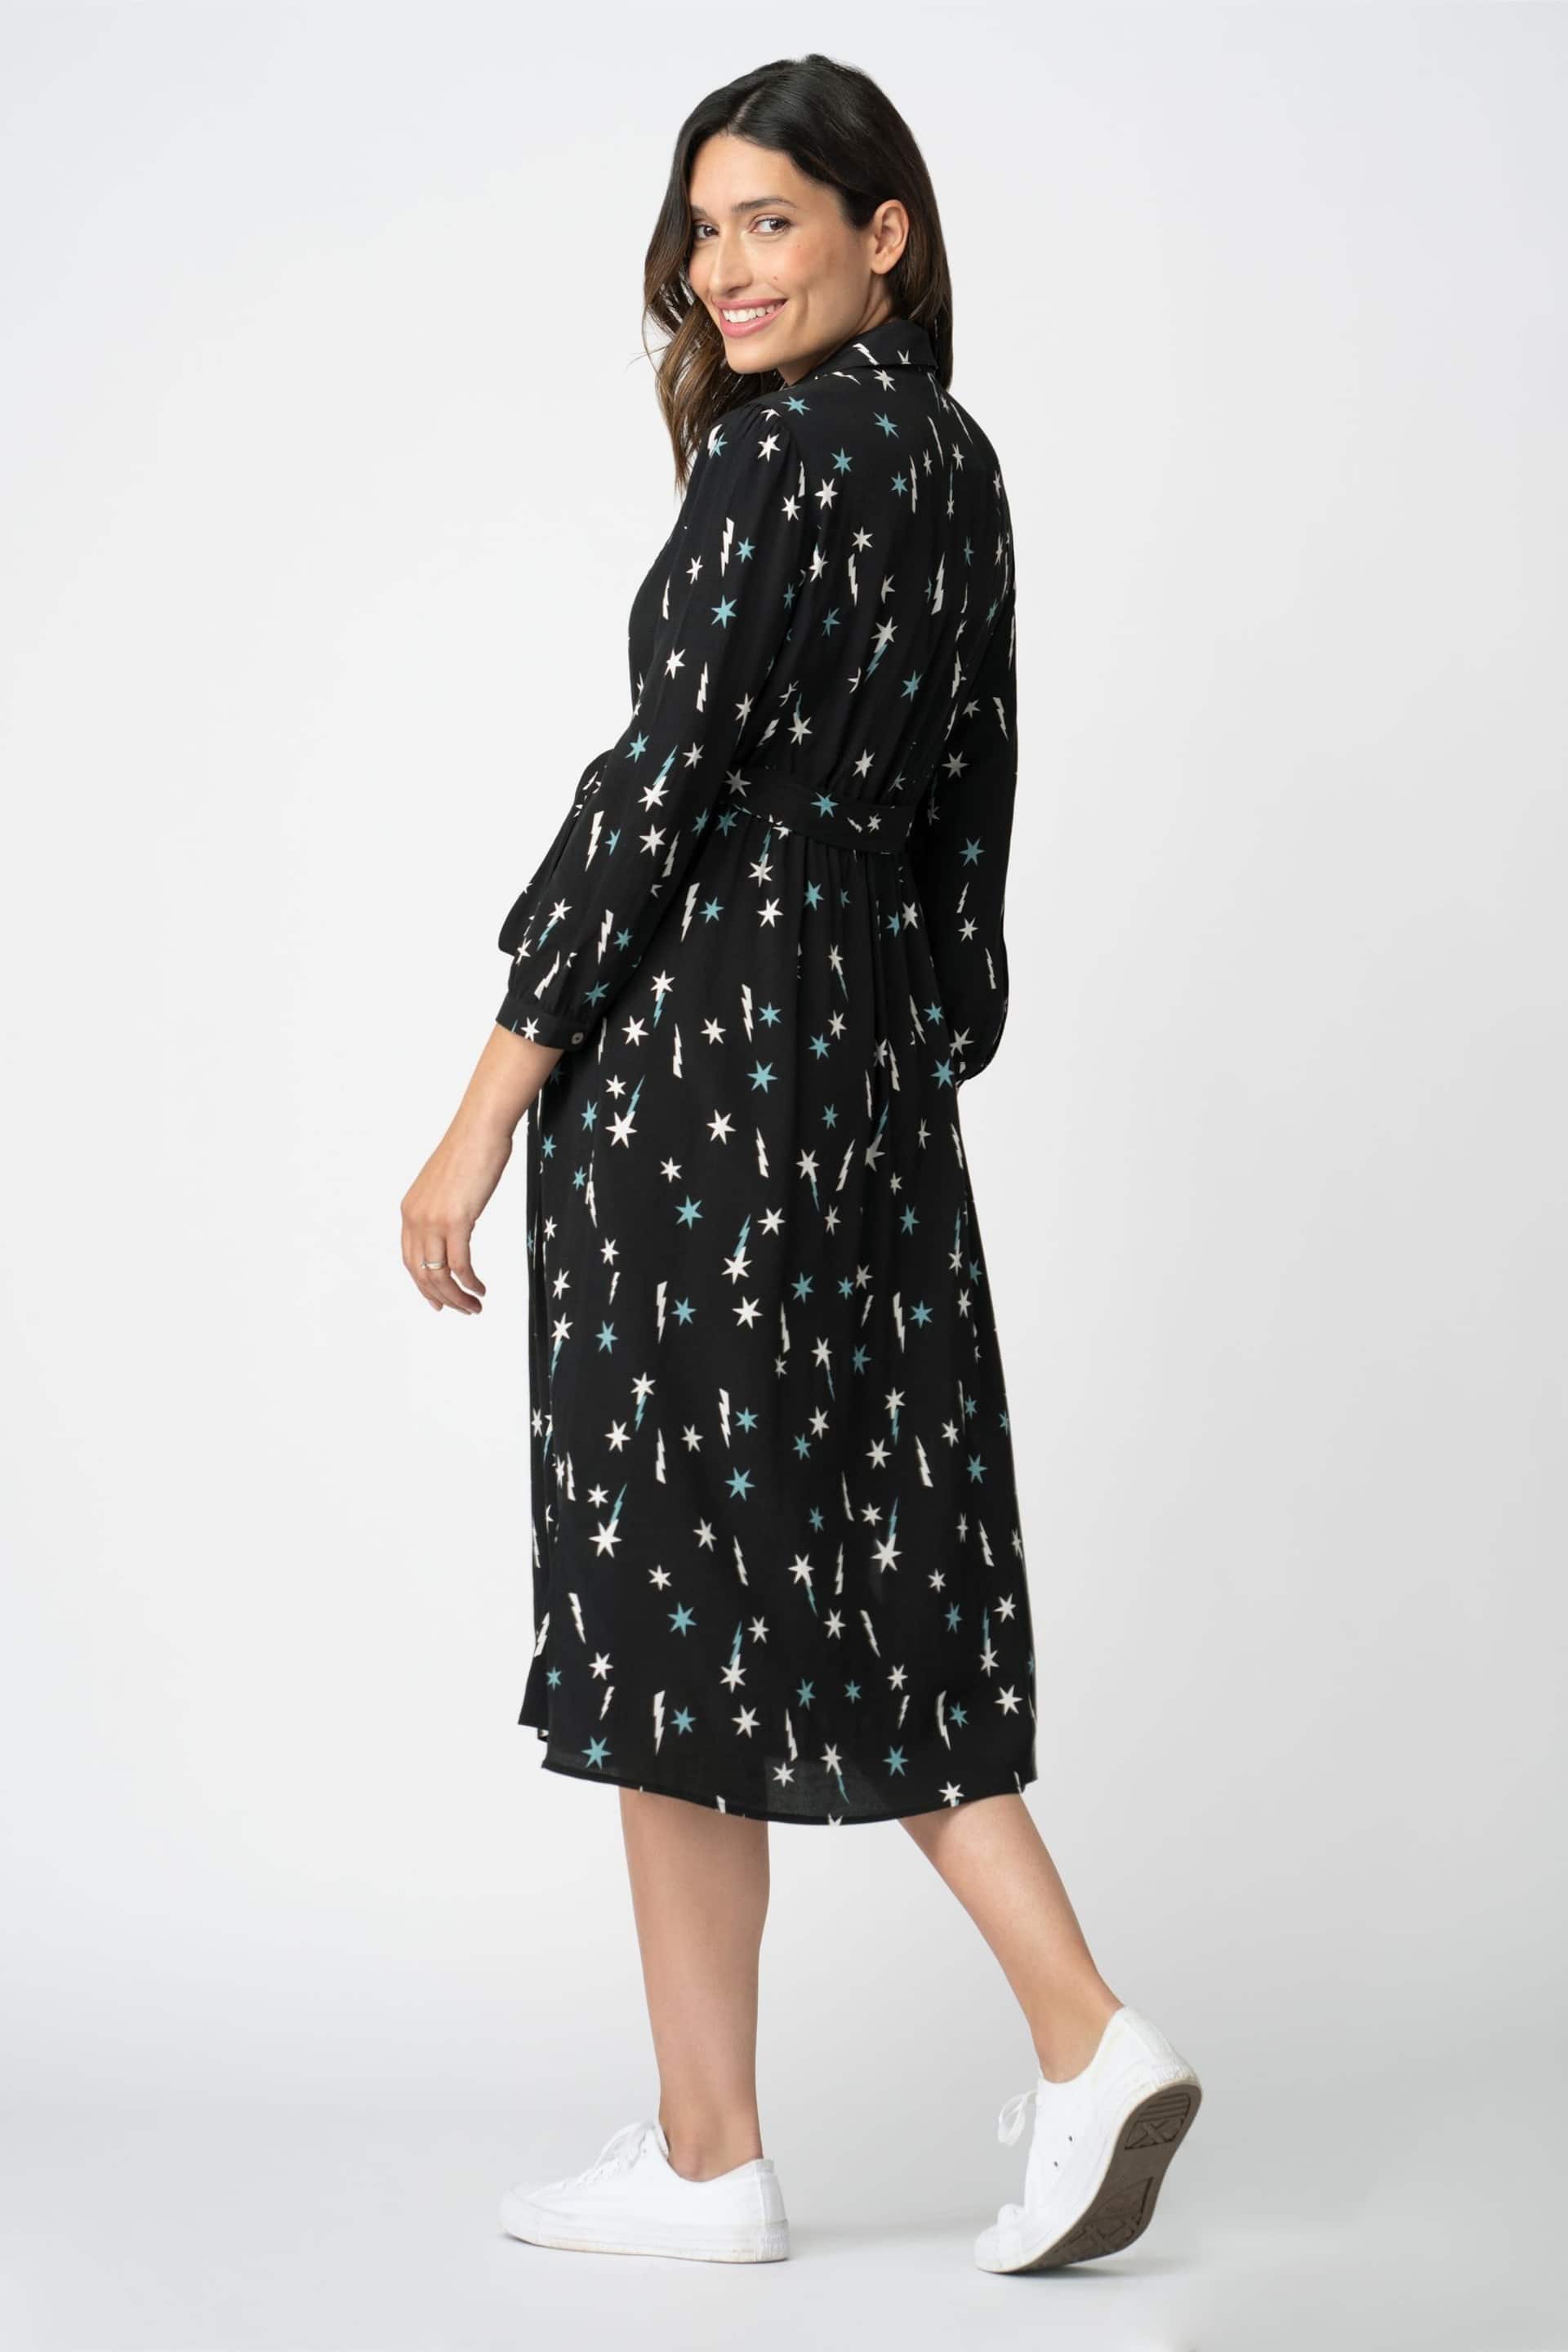 Seraphine Star Print Midi Black Shirt Dress - Image 2 of 6